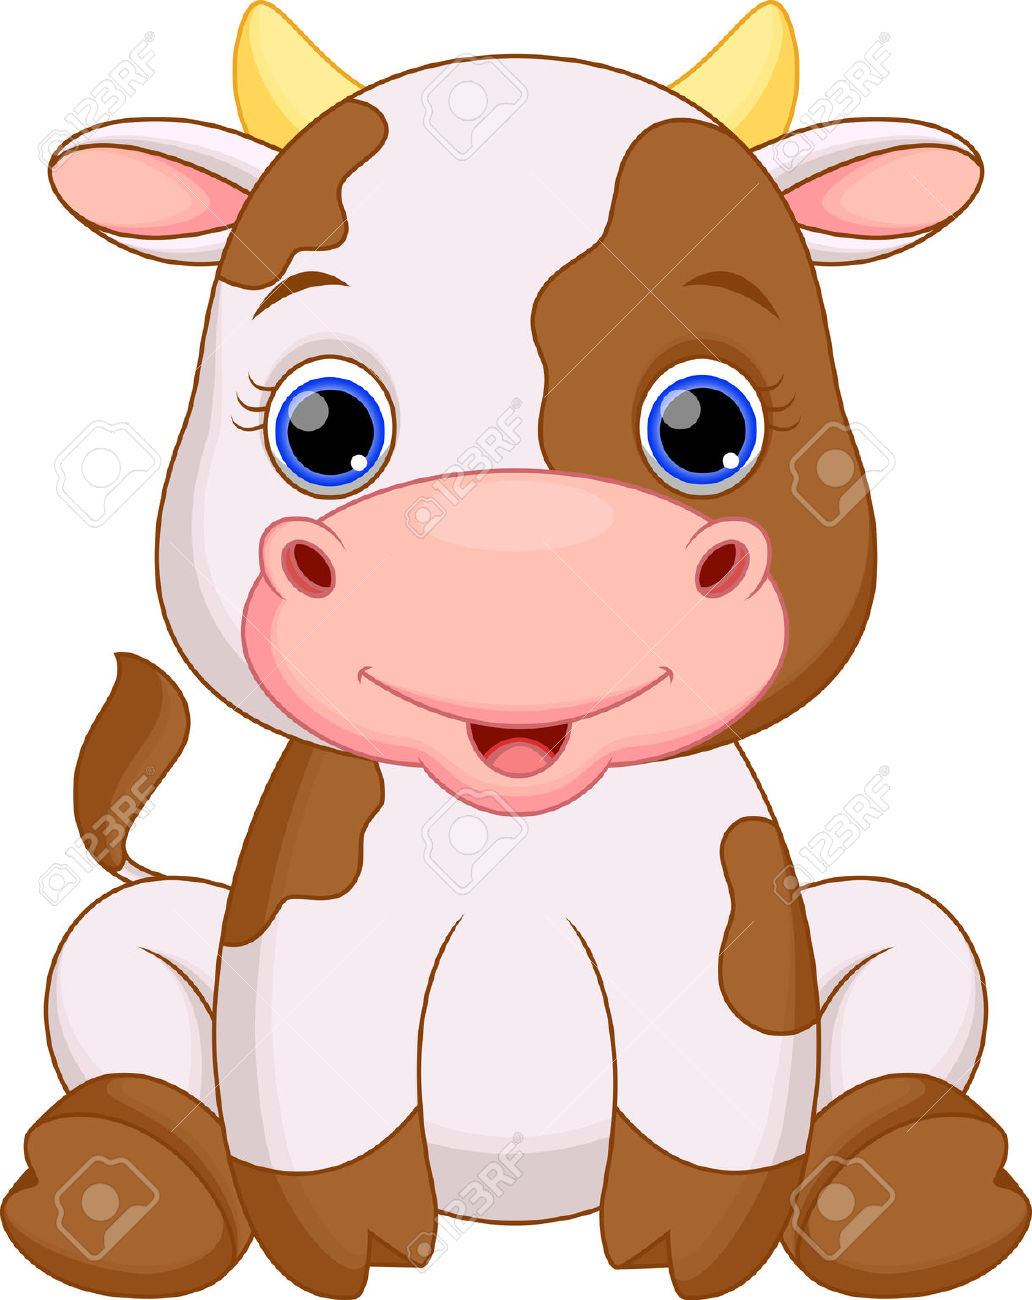 Cute baby cow cartoon Stock Vector - 28414230